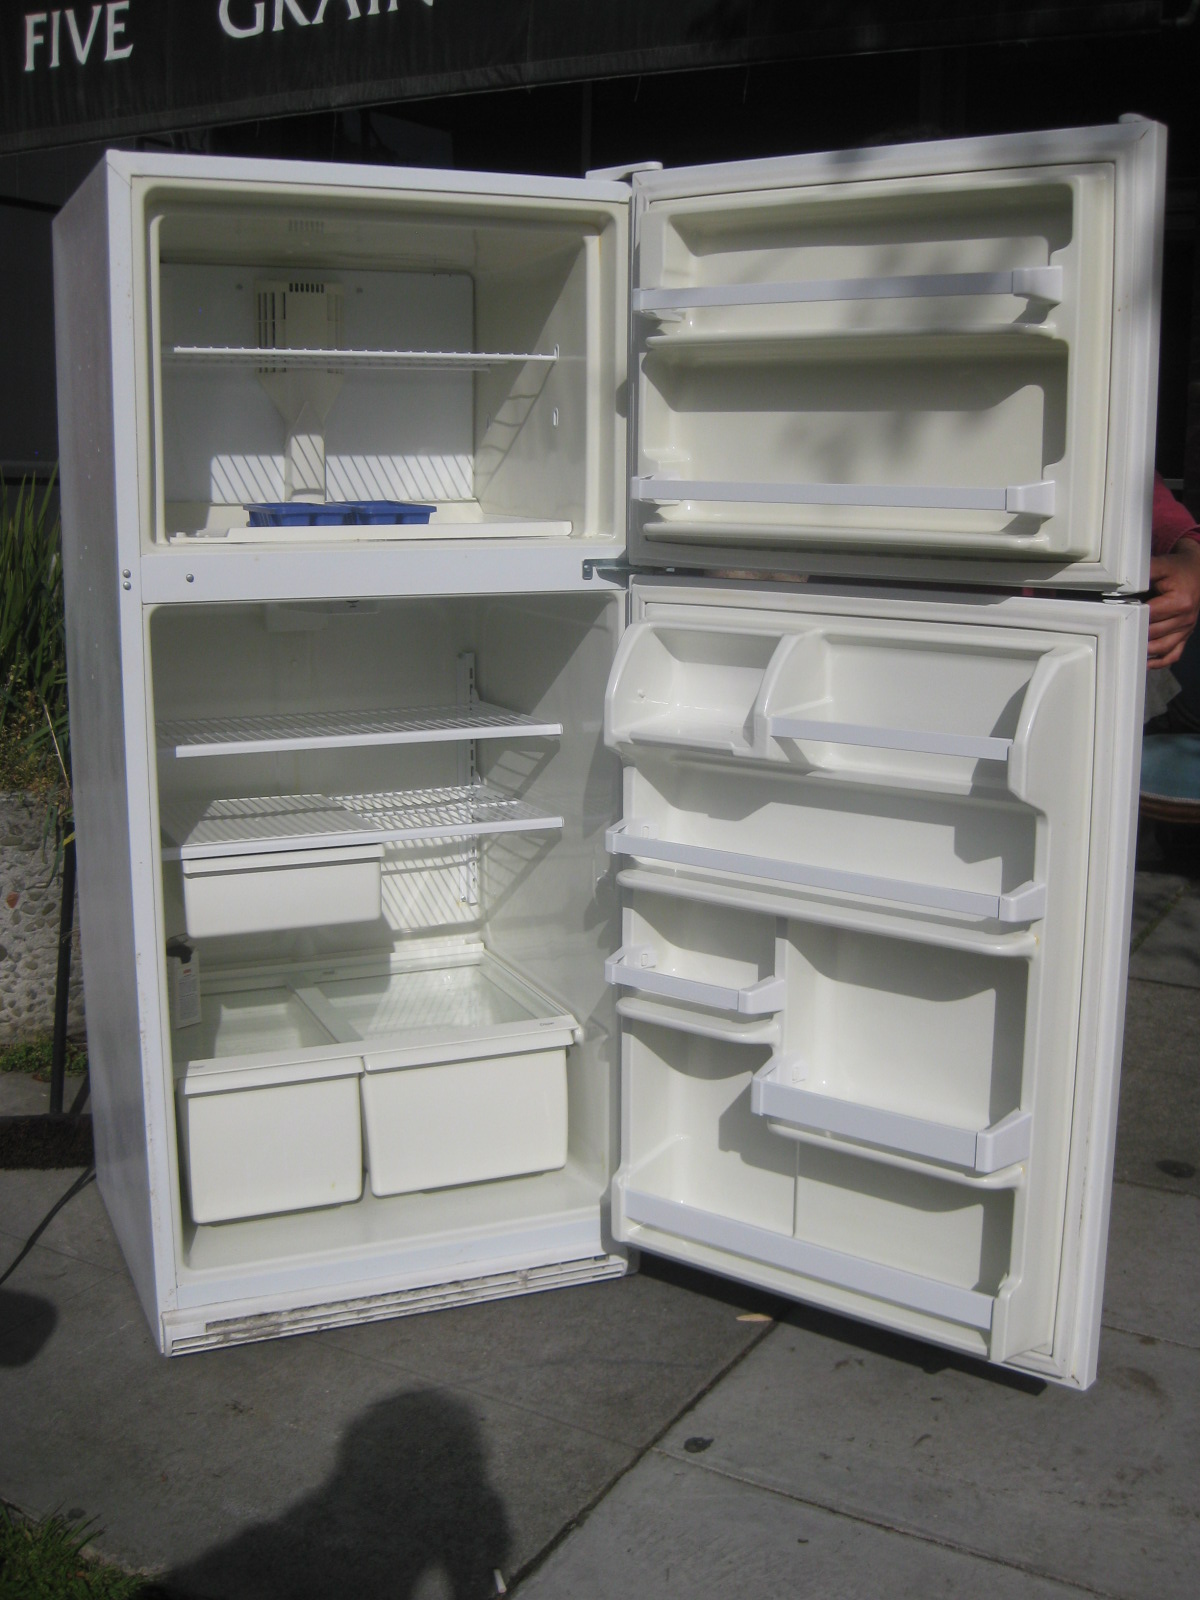 UHURU FURNITURE & COLLECTIBLES: SOLD - 1999 Roper Refrigerator - $100